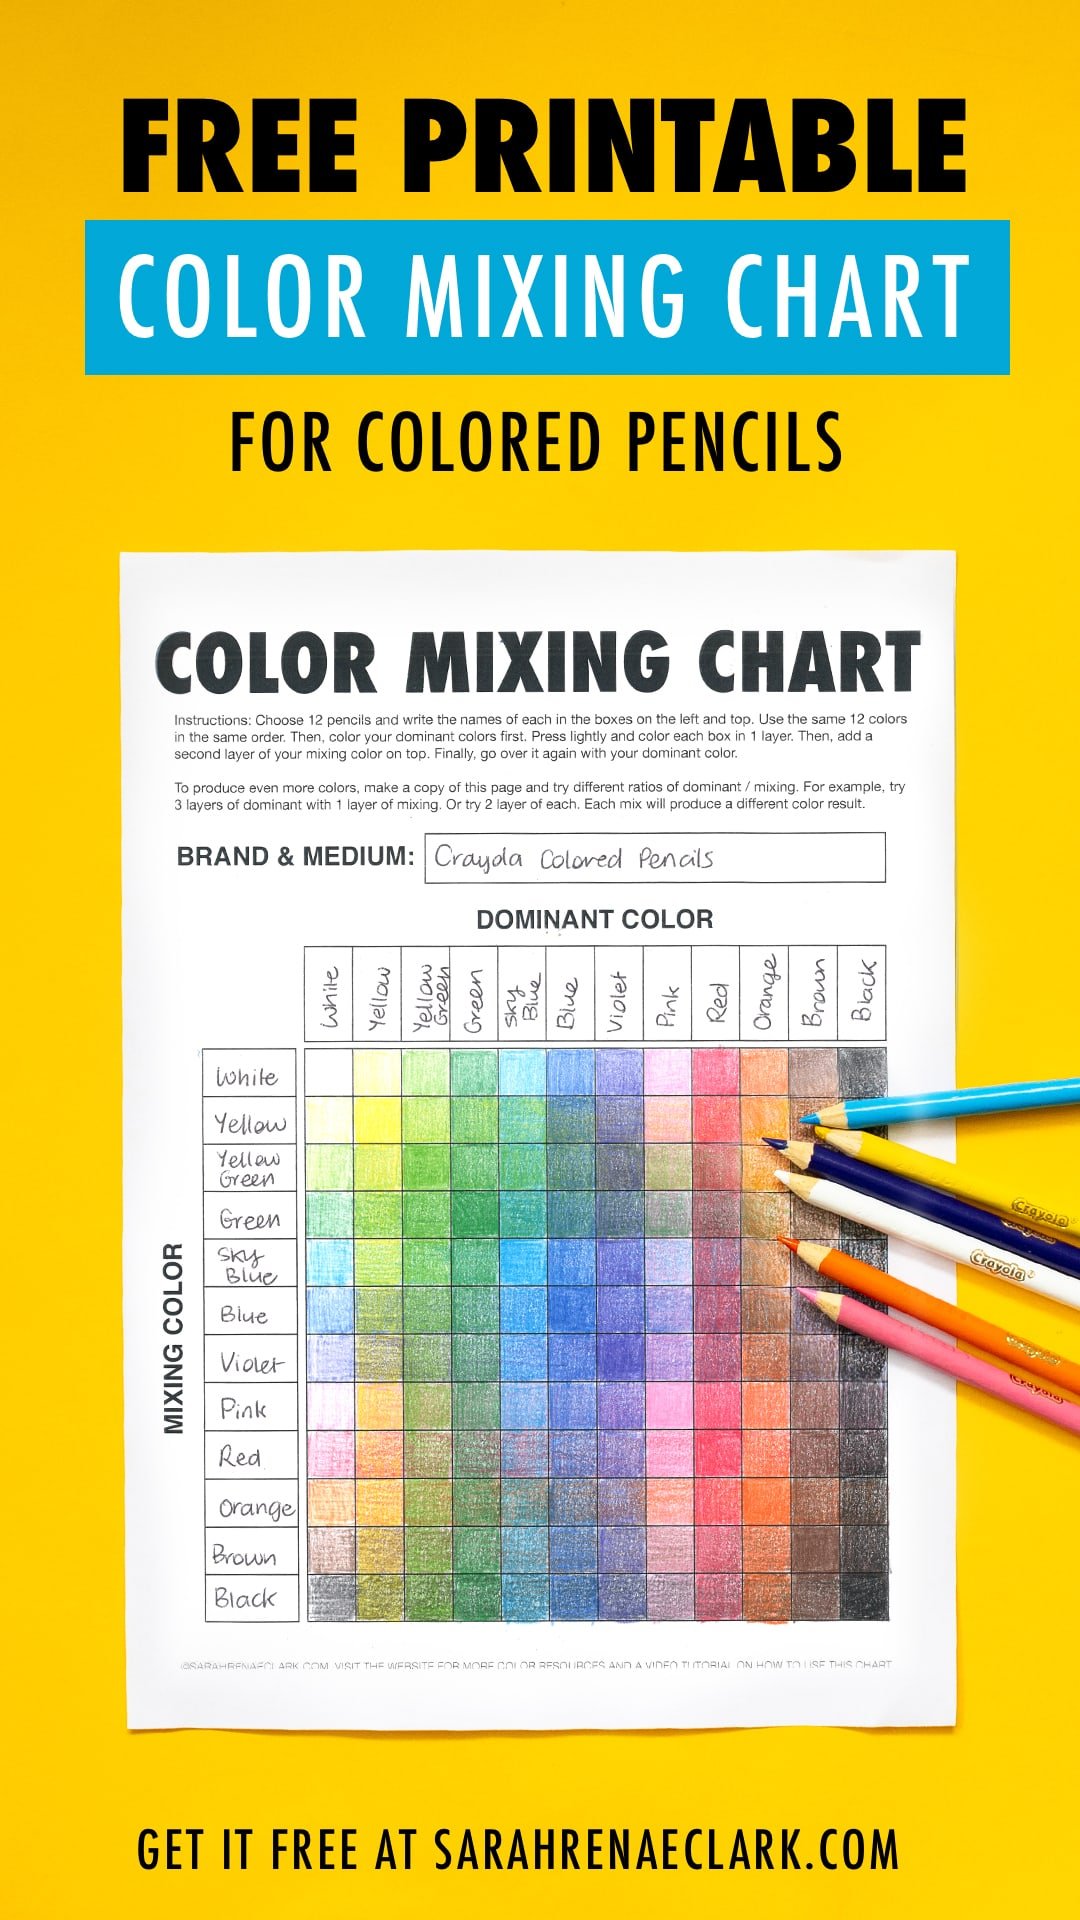 https://sarahrenaeclark.com/wp-content/uploads/2020/10/FREE-color-mixing-chart-2.jpg